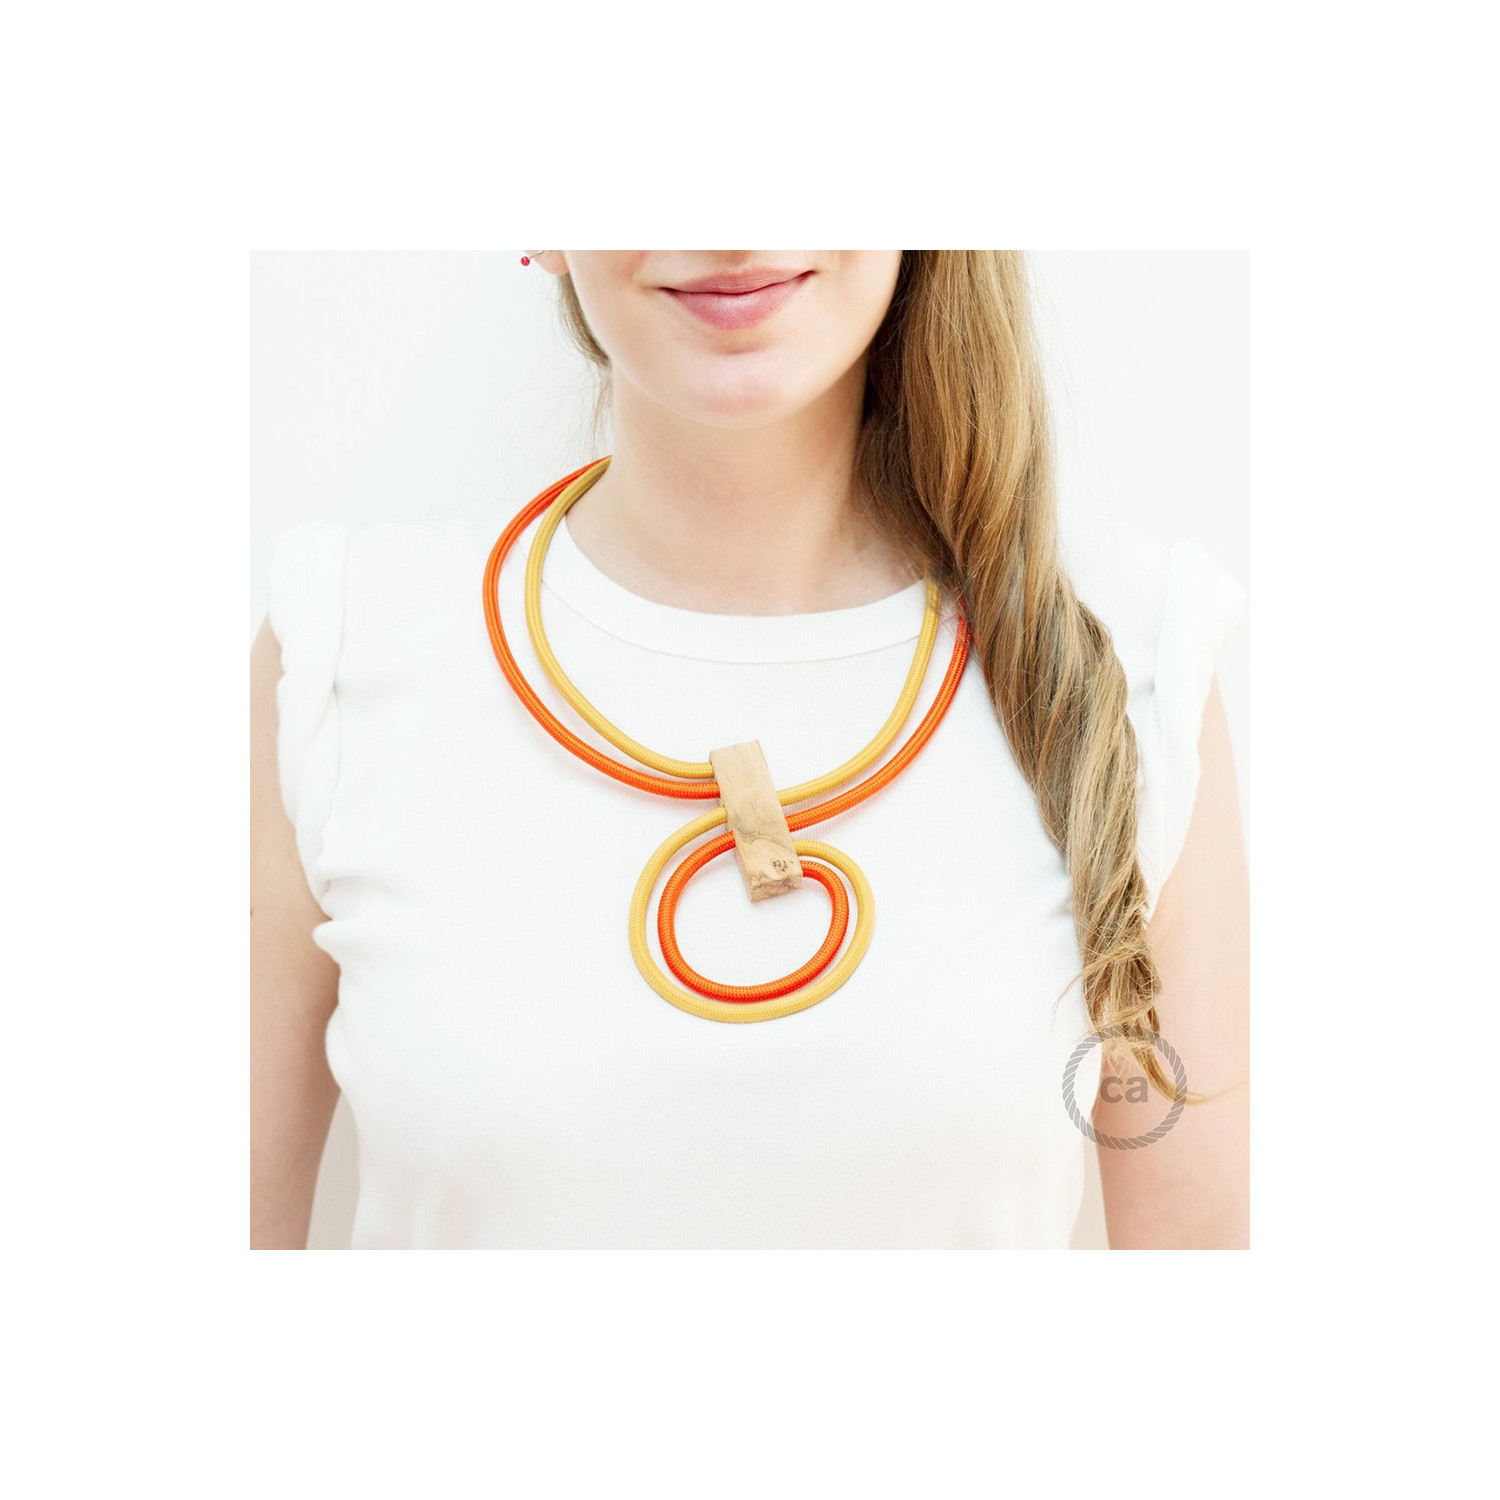 Collana Infinity regolabile bicolore Senape RM25 e Arancione RM15.